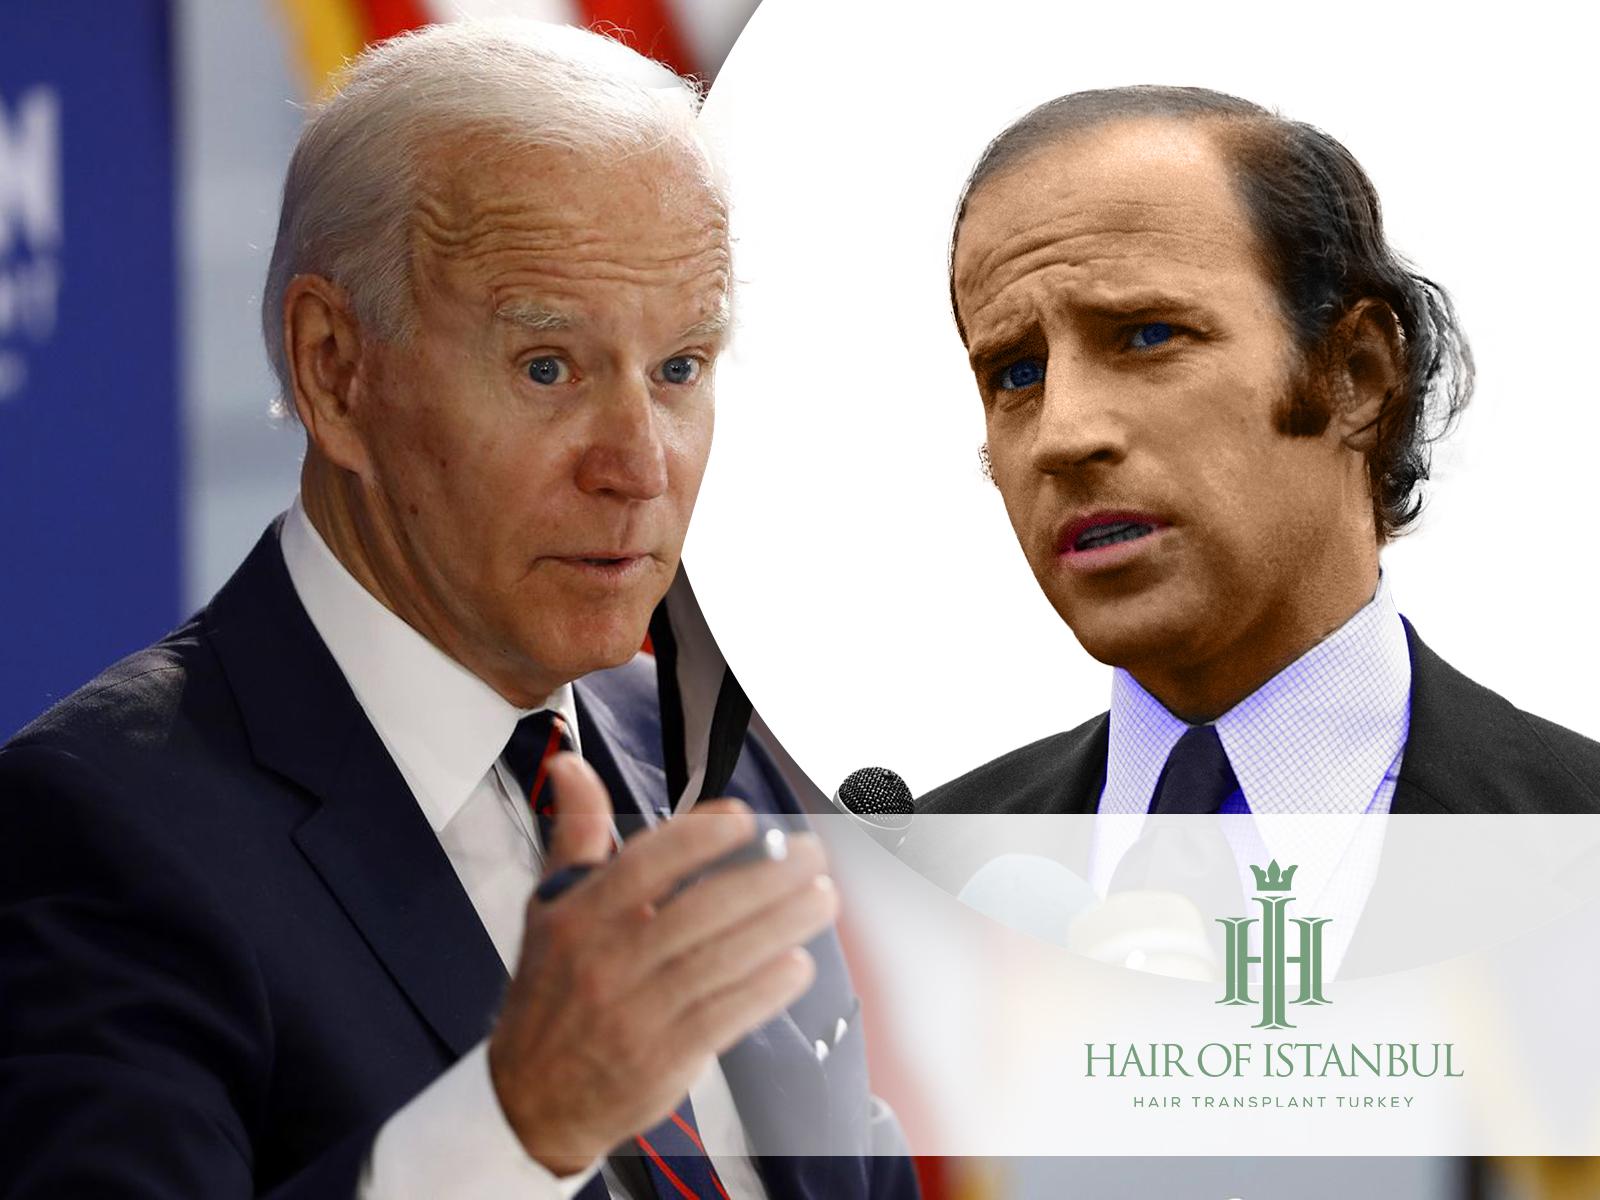 Joe Biden Hair Transplant: A Closer Look at the Evidence